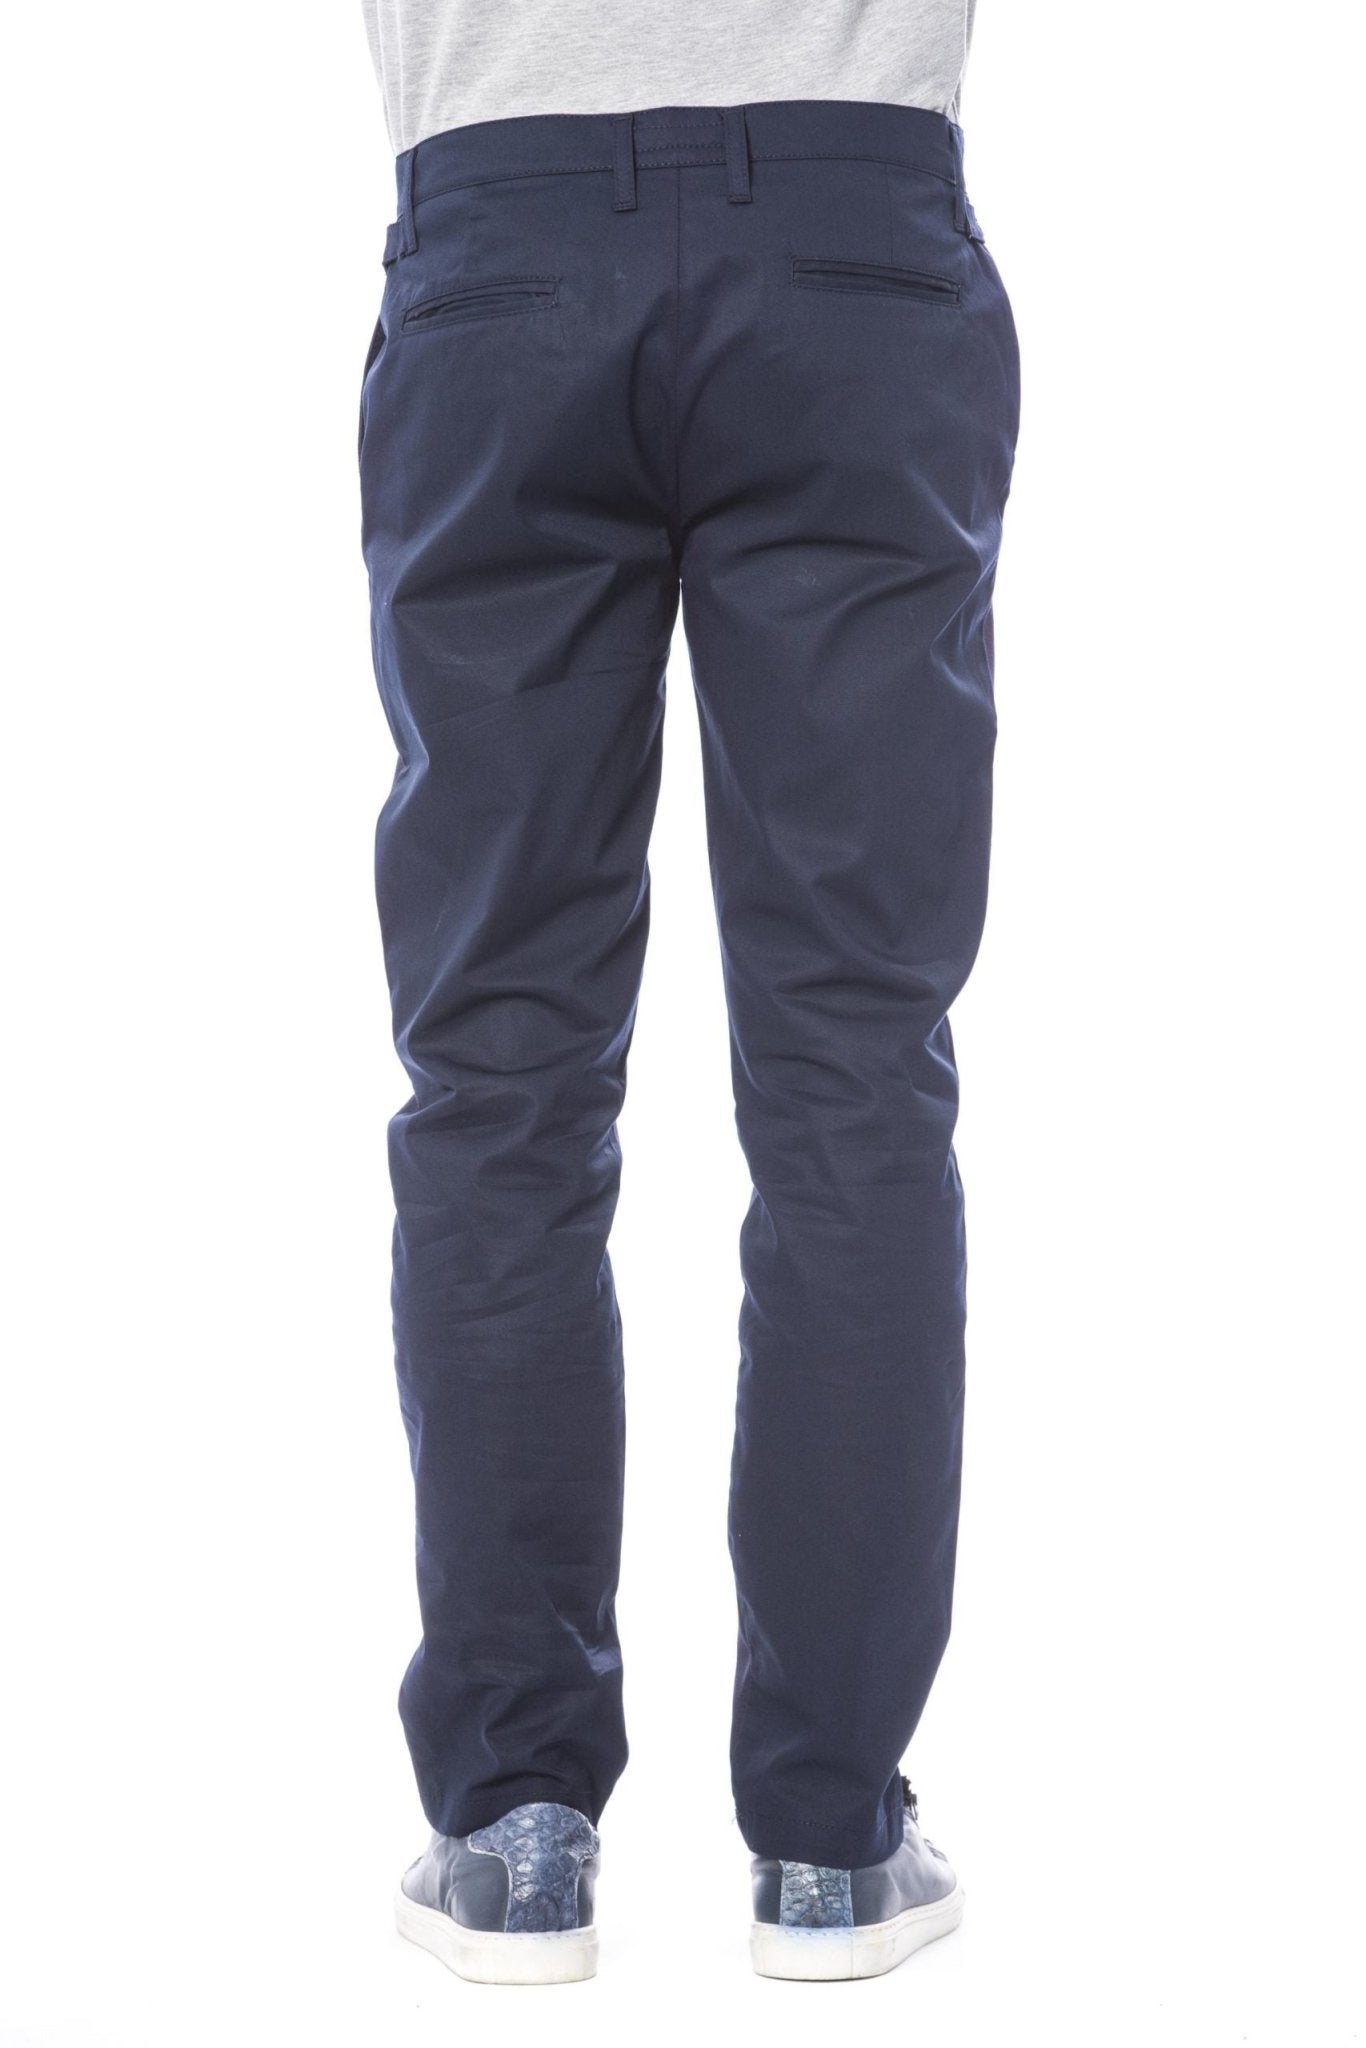 Verri Blue Polyester Jeans & Pant - Fizigo